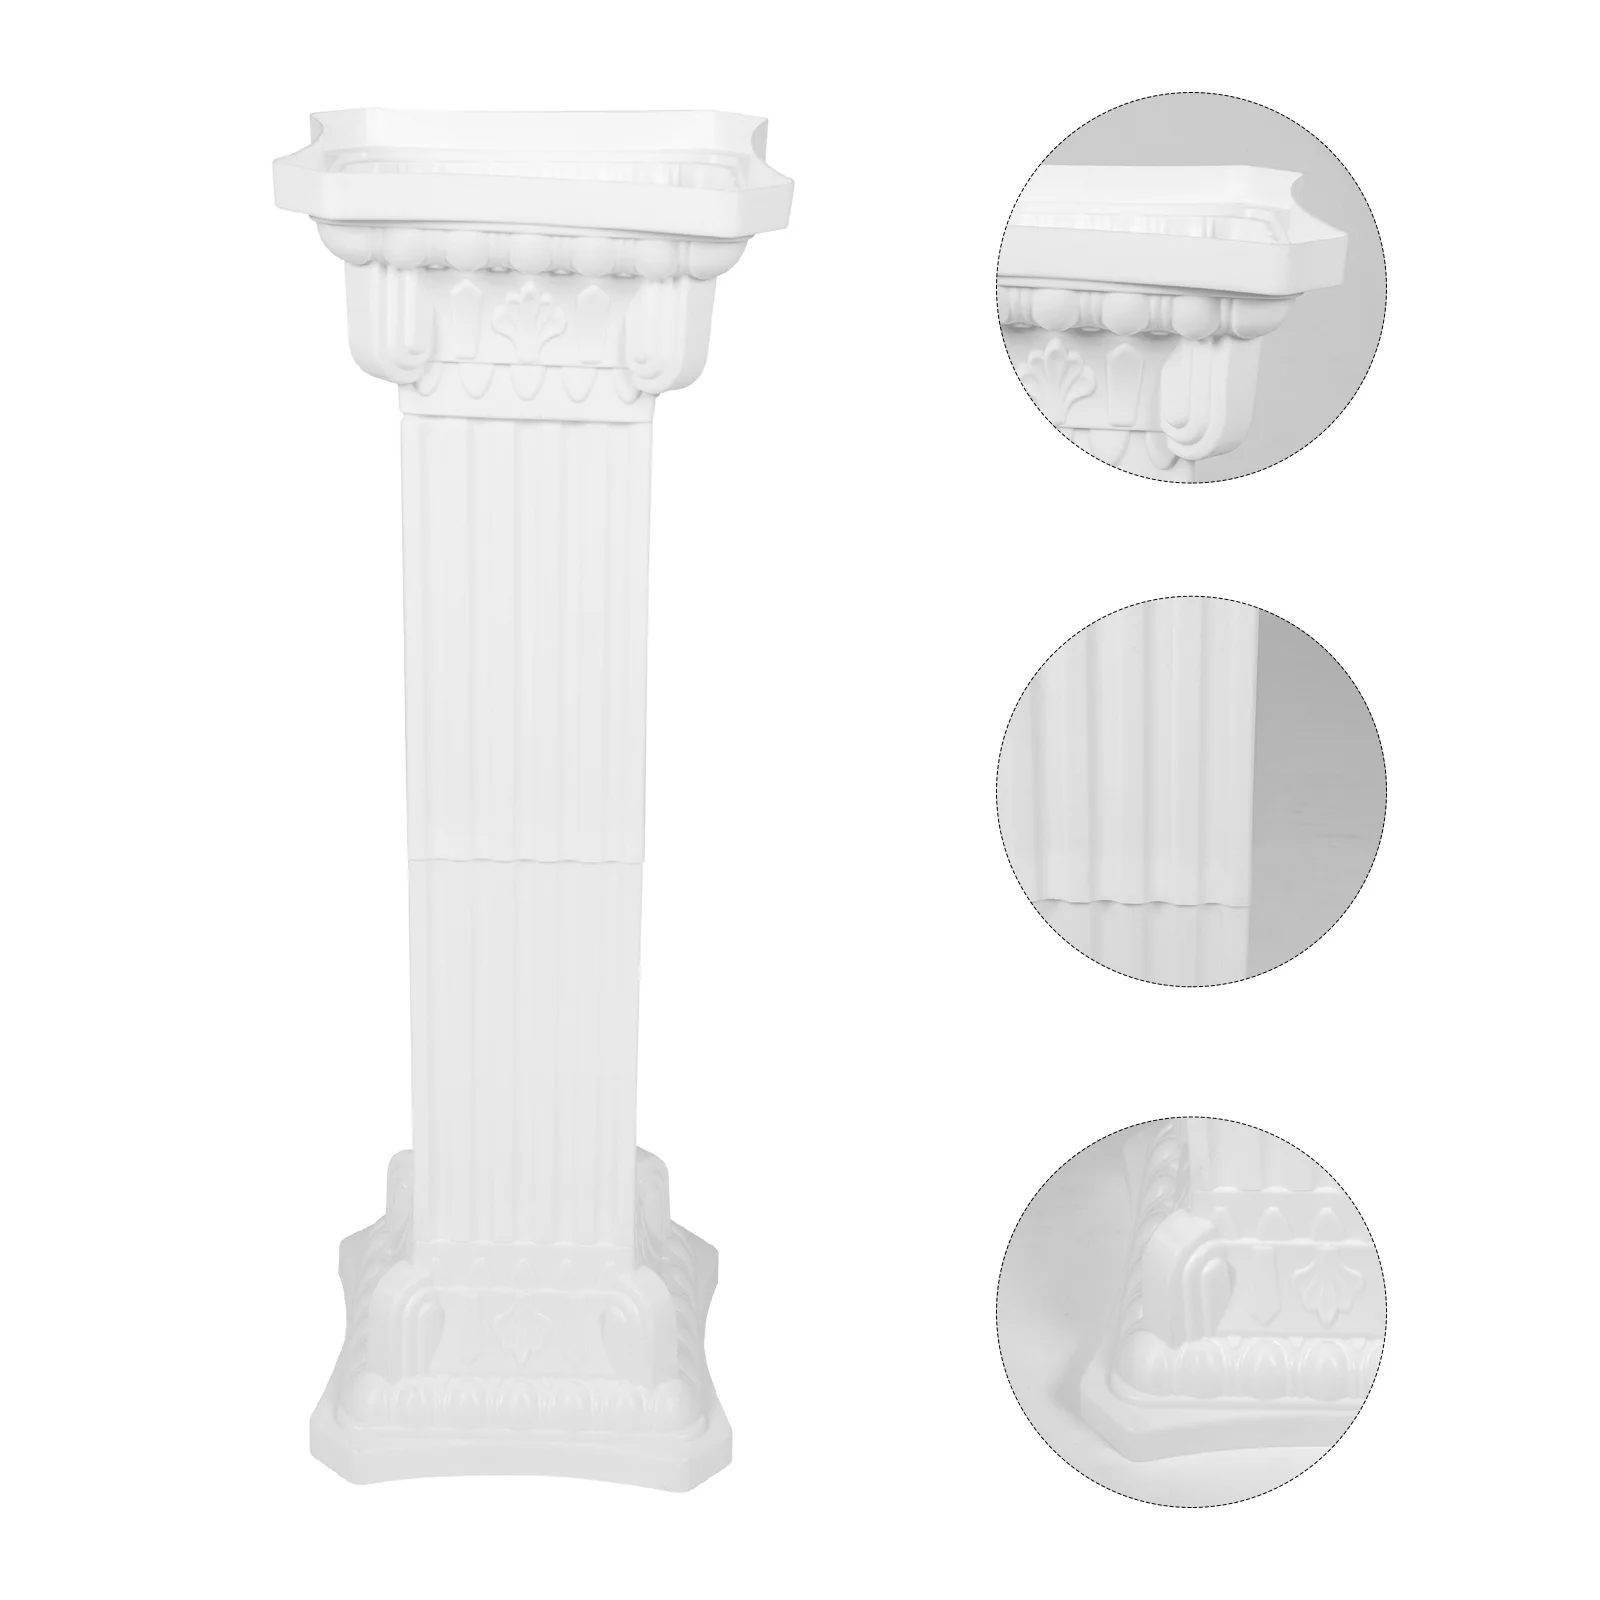 

Square Outdoor Planter Roman Column Decorative Road Pillar Guiding Prop Party Landscape Artistic Statue White Plastic Bride